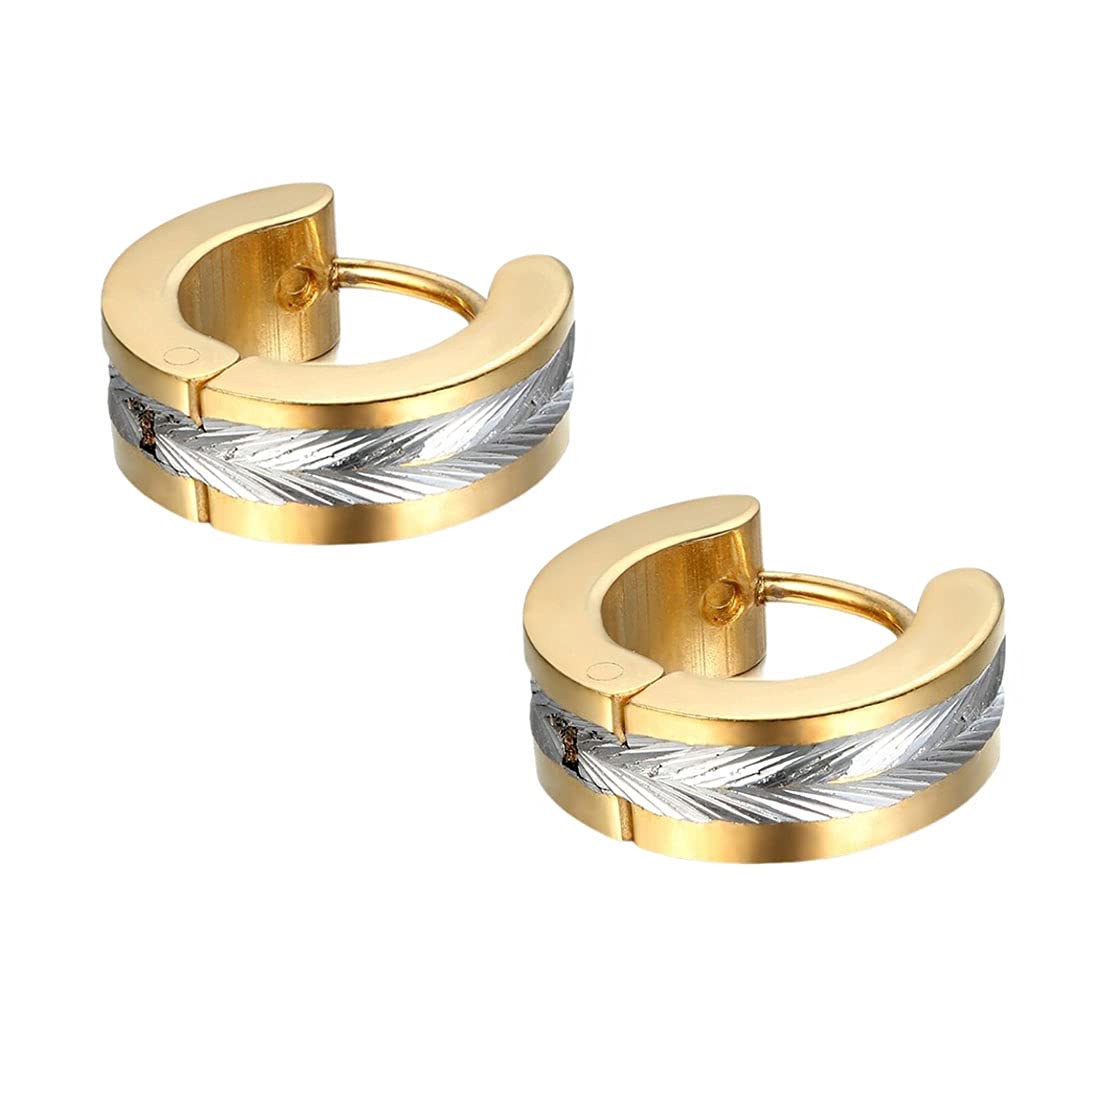 Buy Surgical Steel Small Huggie Hoop Earrings Gold Silver Online in India   Etsy